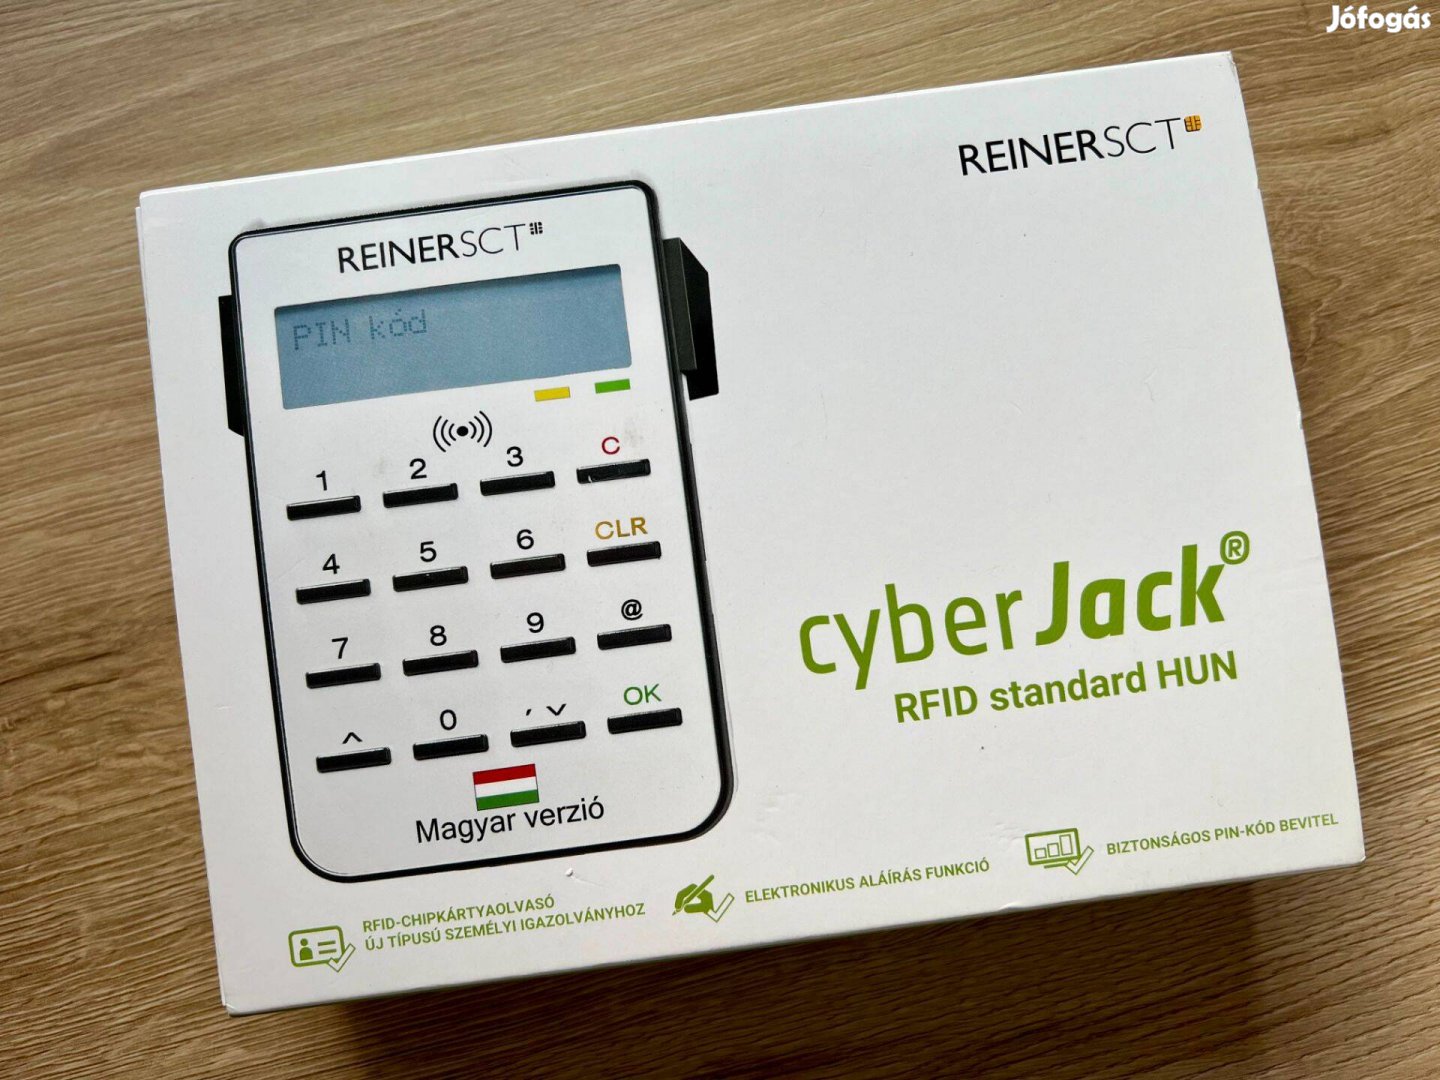 Reinersct Cyberjack RFID standard HUN kártyaolvasó